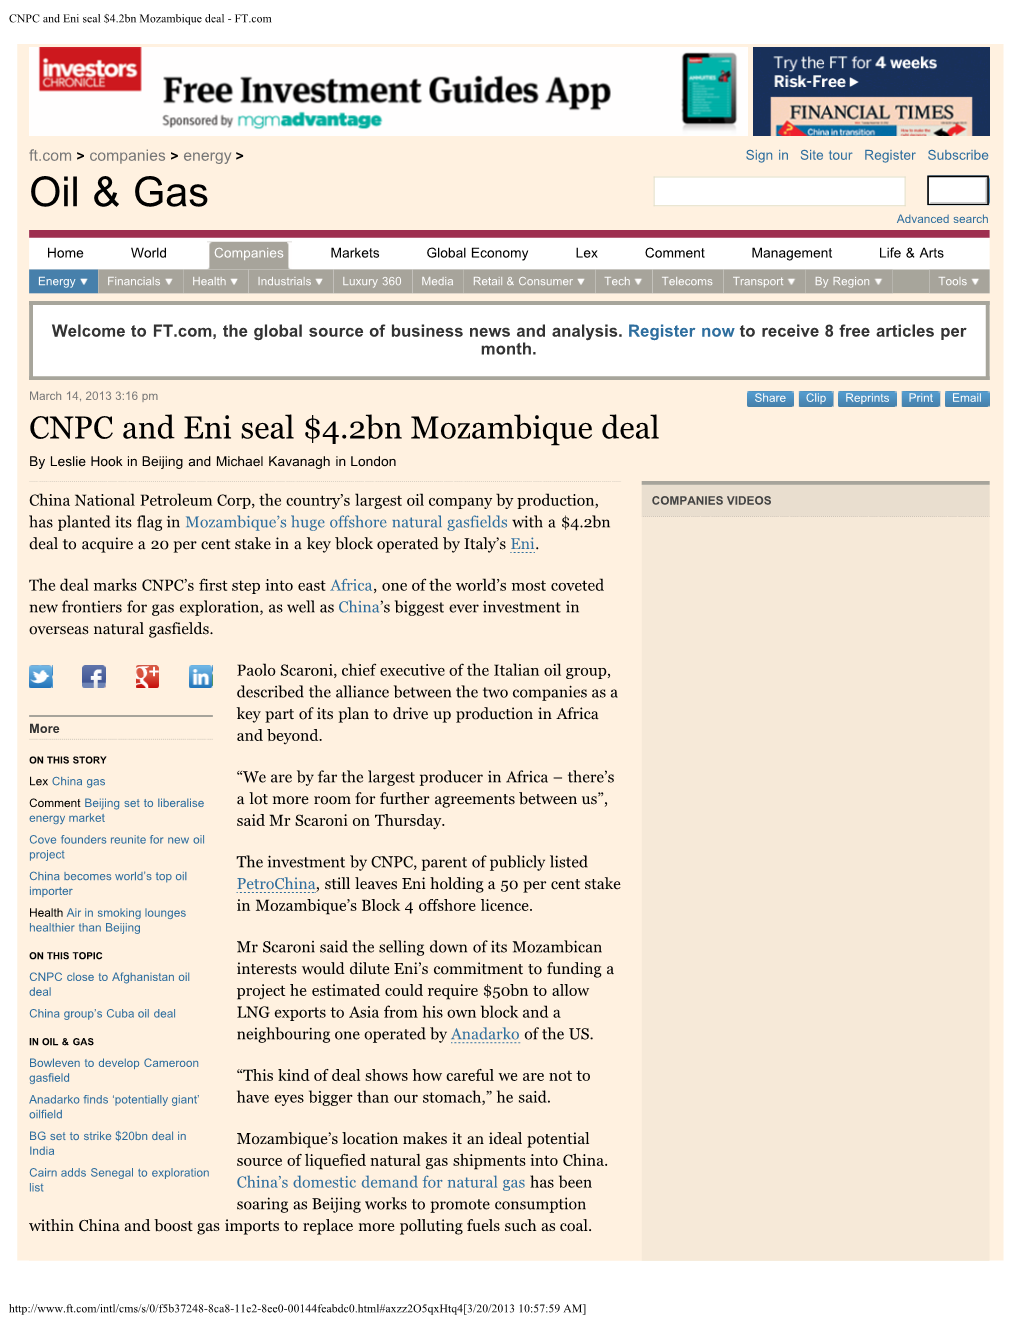 CNPC and Eni Seal $4.2Bn Mozambique Deal - FT.Com